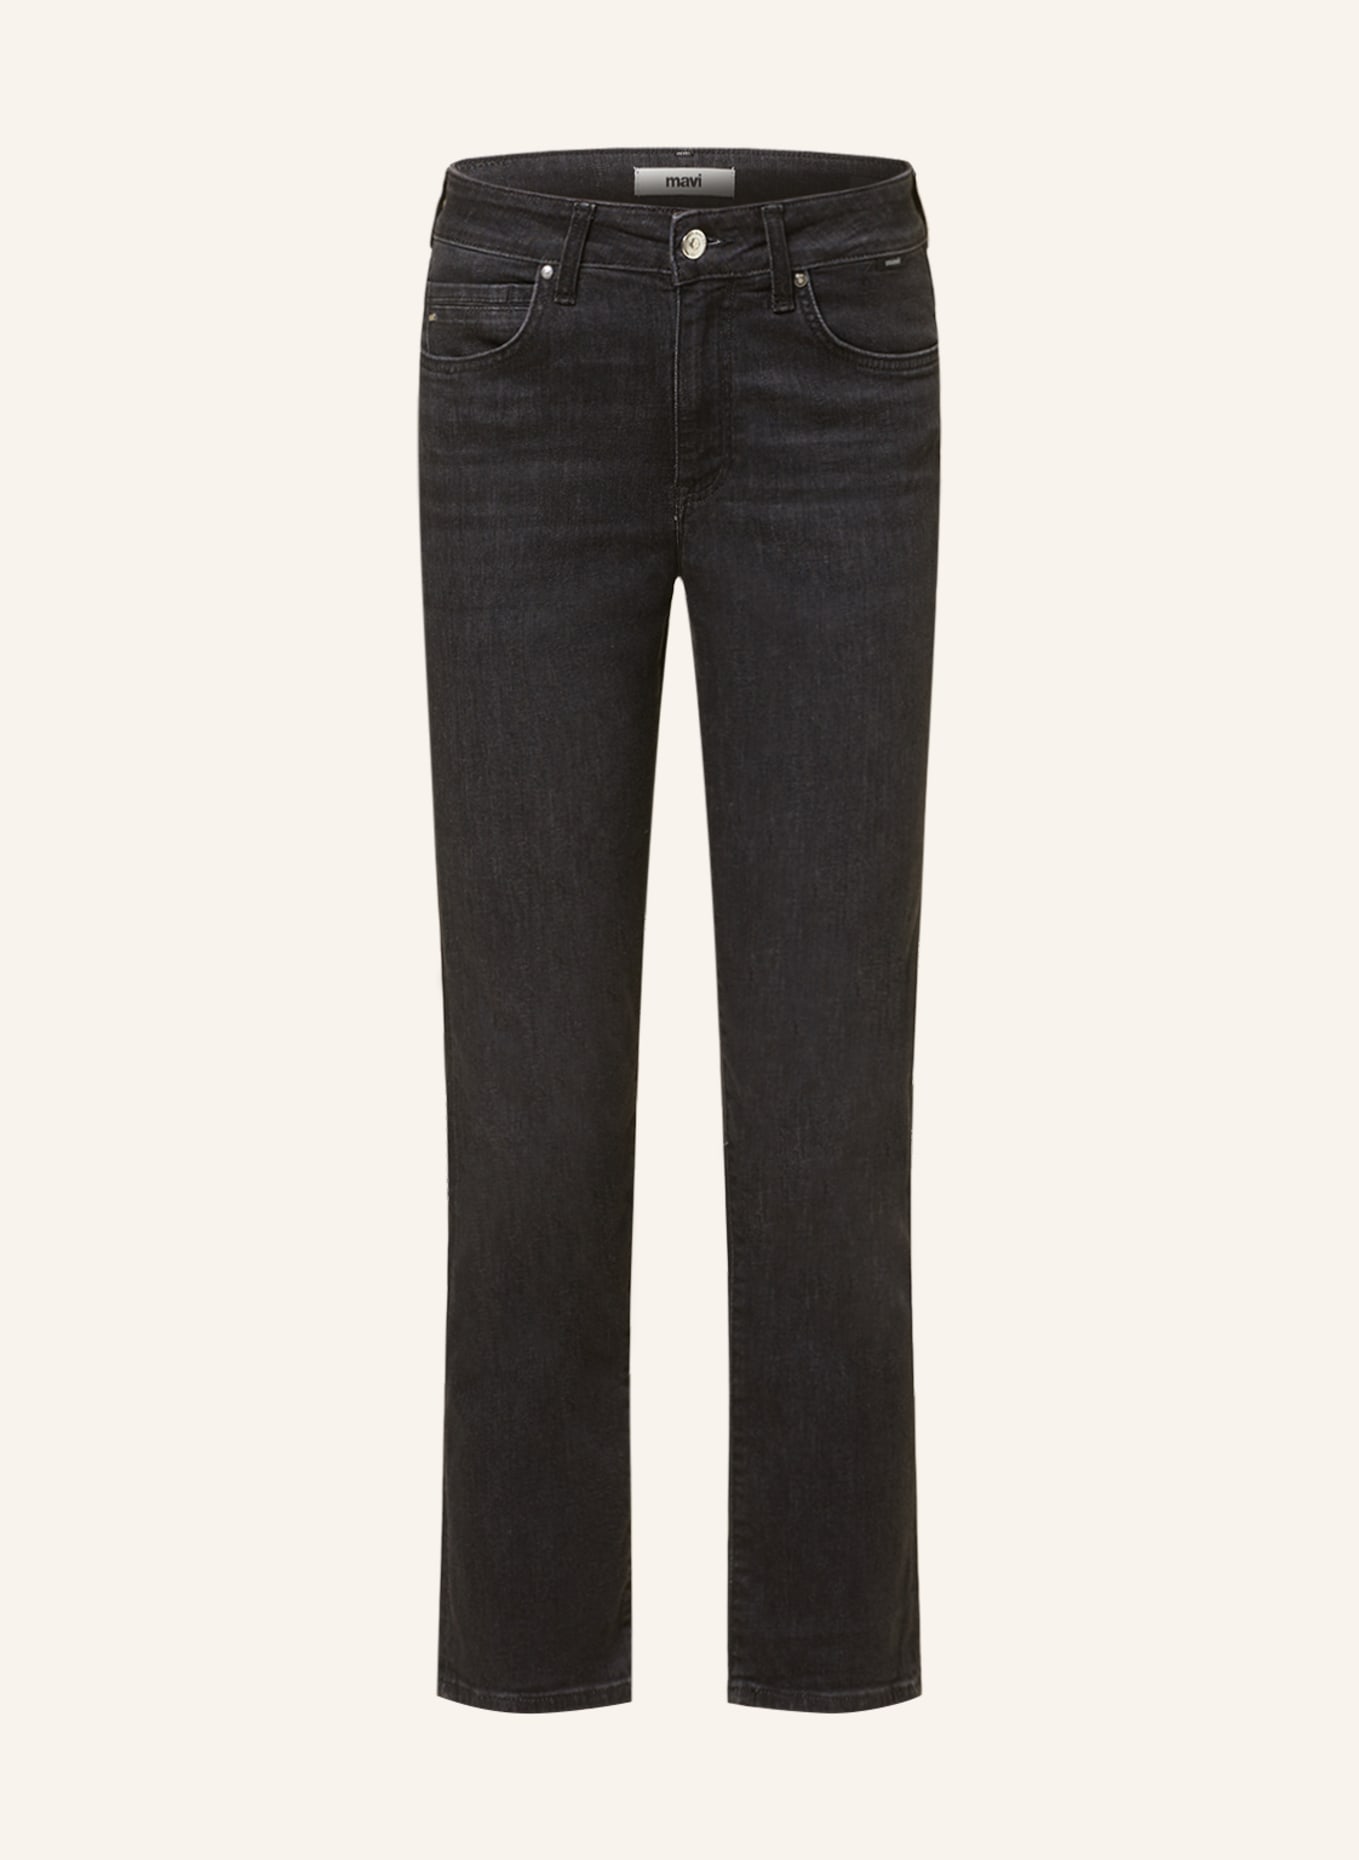 mavi Straight Jeans KENDRA, Farbe: 84984 smoke brushed glam (Bild 1)